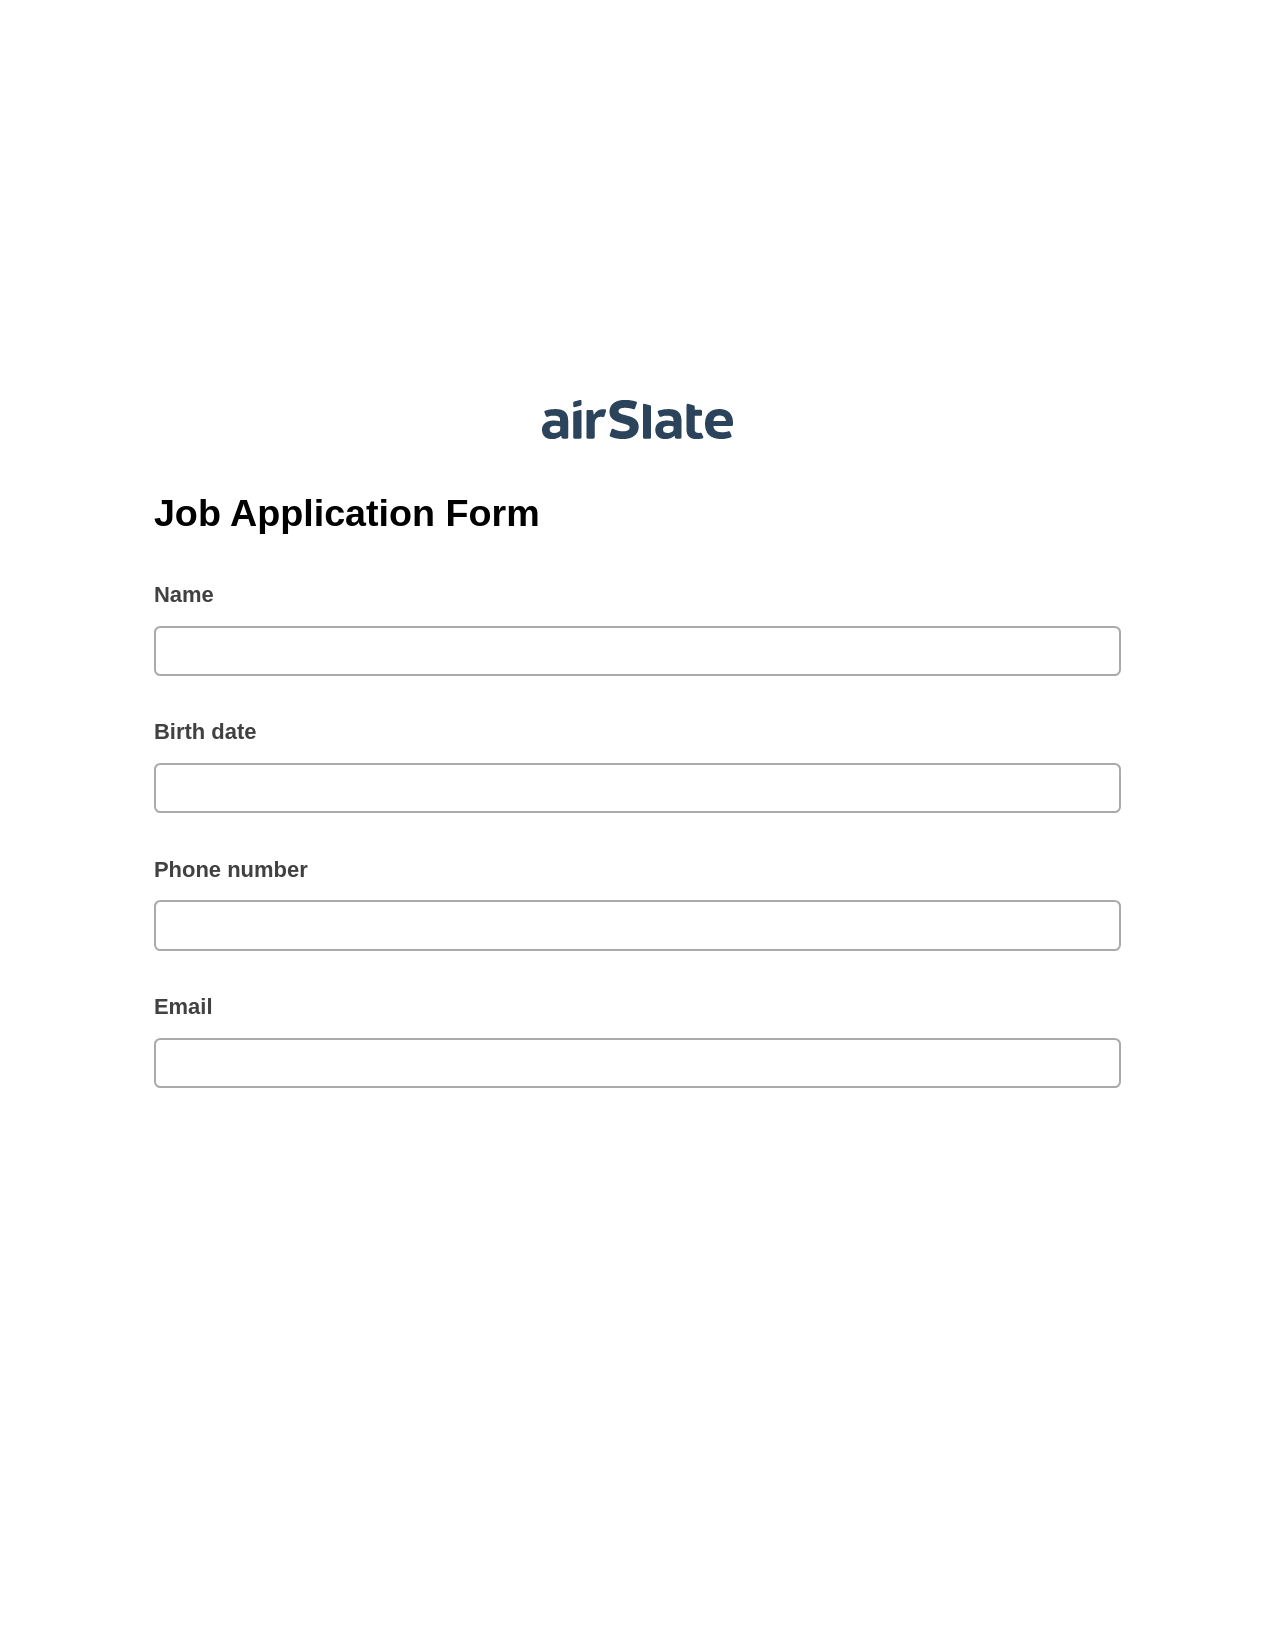 Multirole Job Application Form Pre-fill from Google Sheet Dropdown Options Bot, Slack Notification Bot, Export to Salesforce Bot